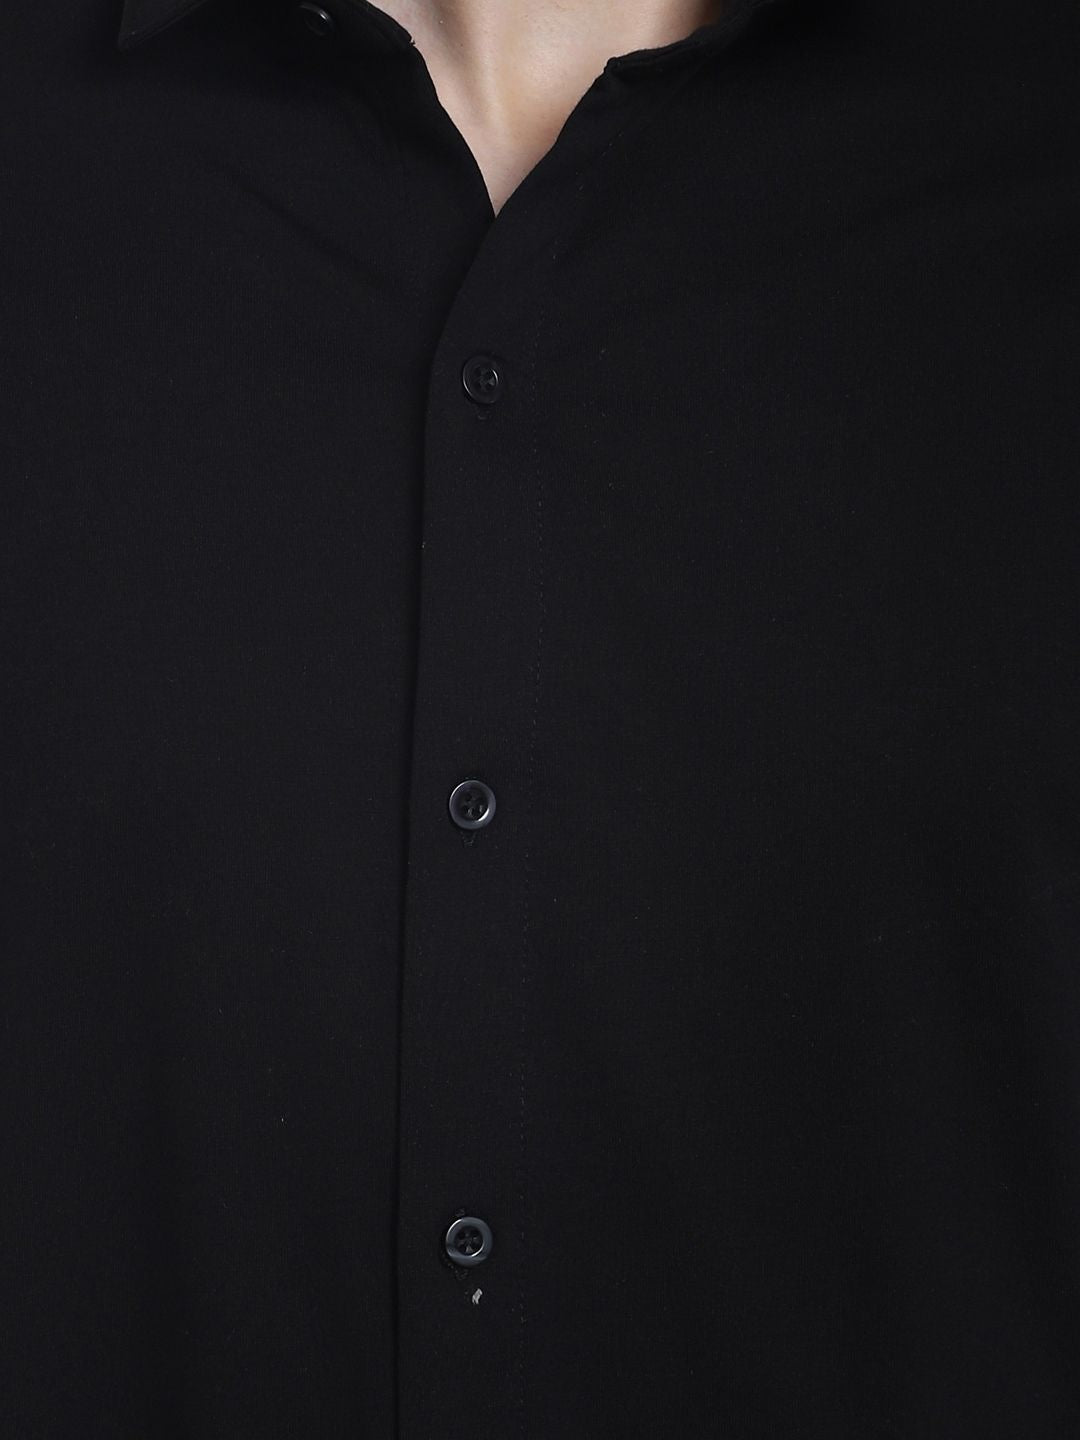 Noir Black Shirt - Wearduds